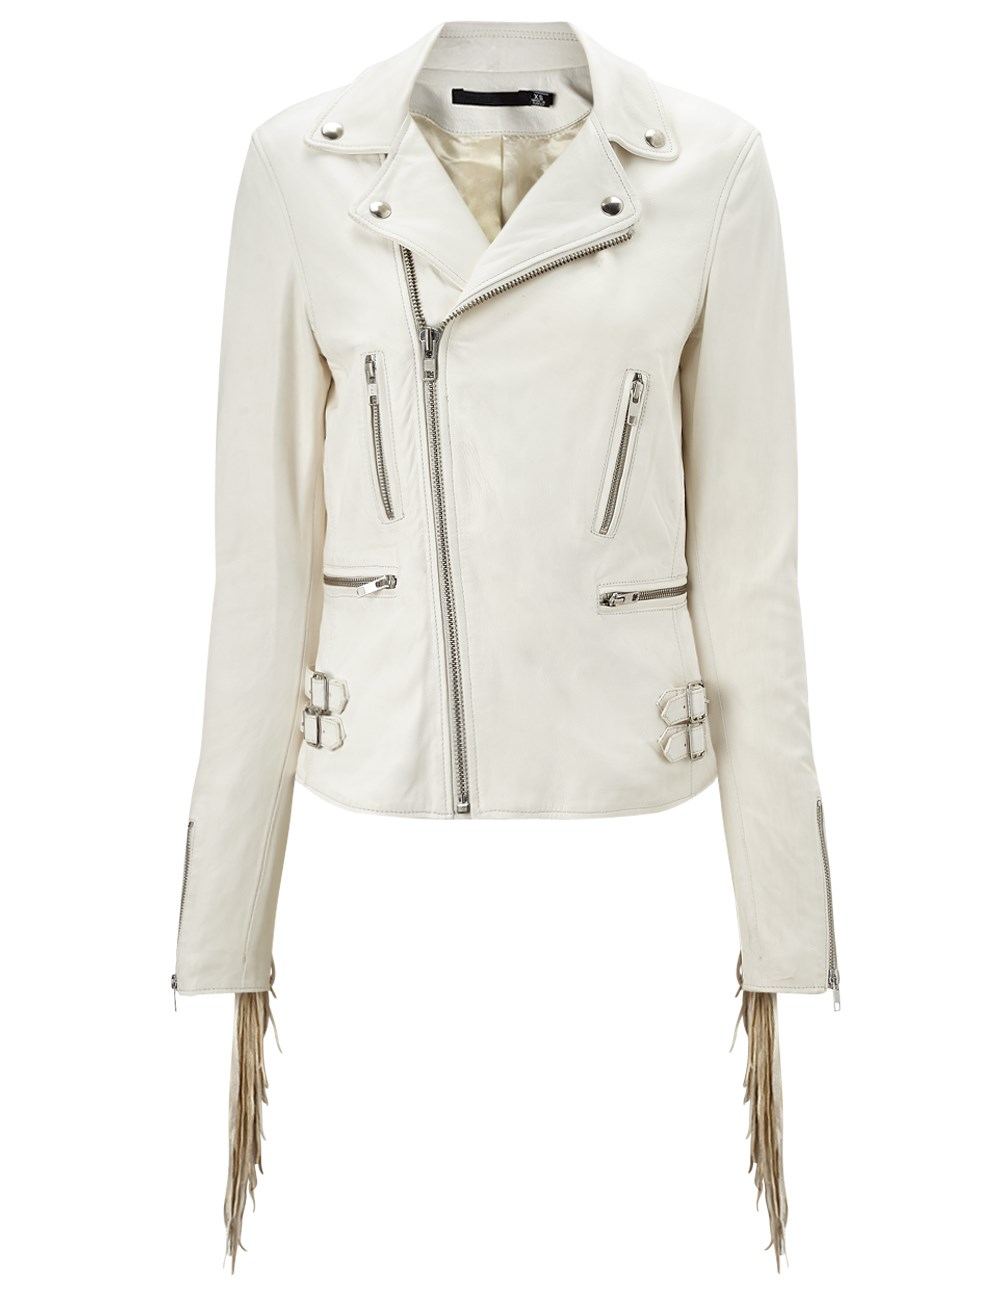 Blk Dnm White Leather Fringe Jacket 10 in White | Lyst